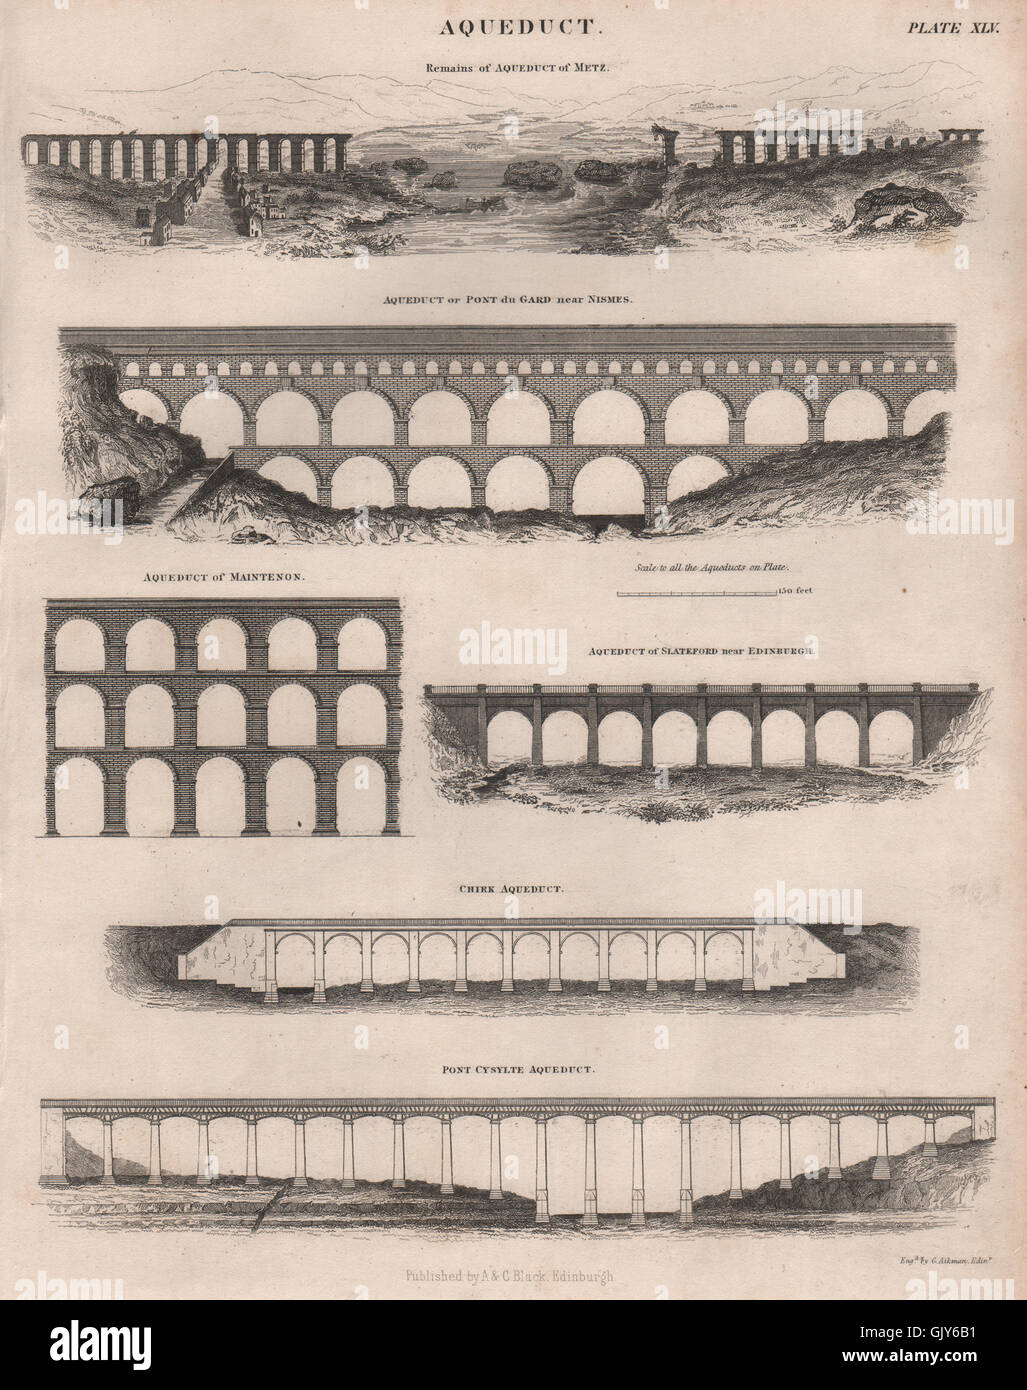 Aqueducts. Metz Pont du Gard Nimes Maintenon Slateford Chirk Pont Cysylte, 1860 Stock Photo